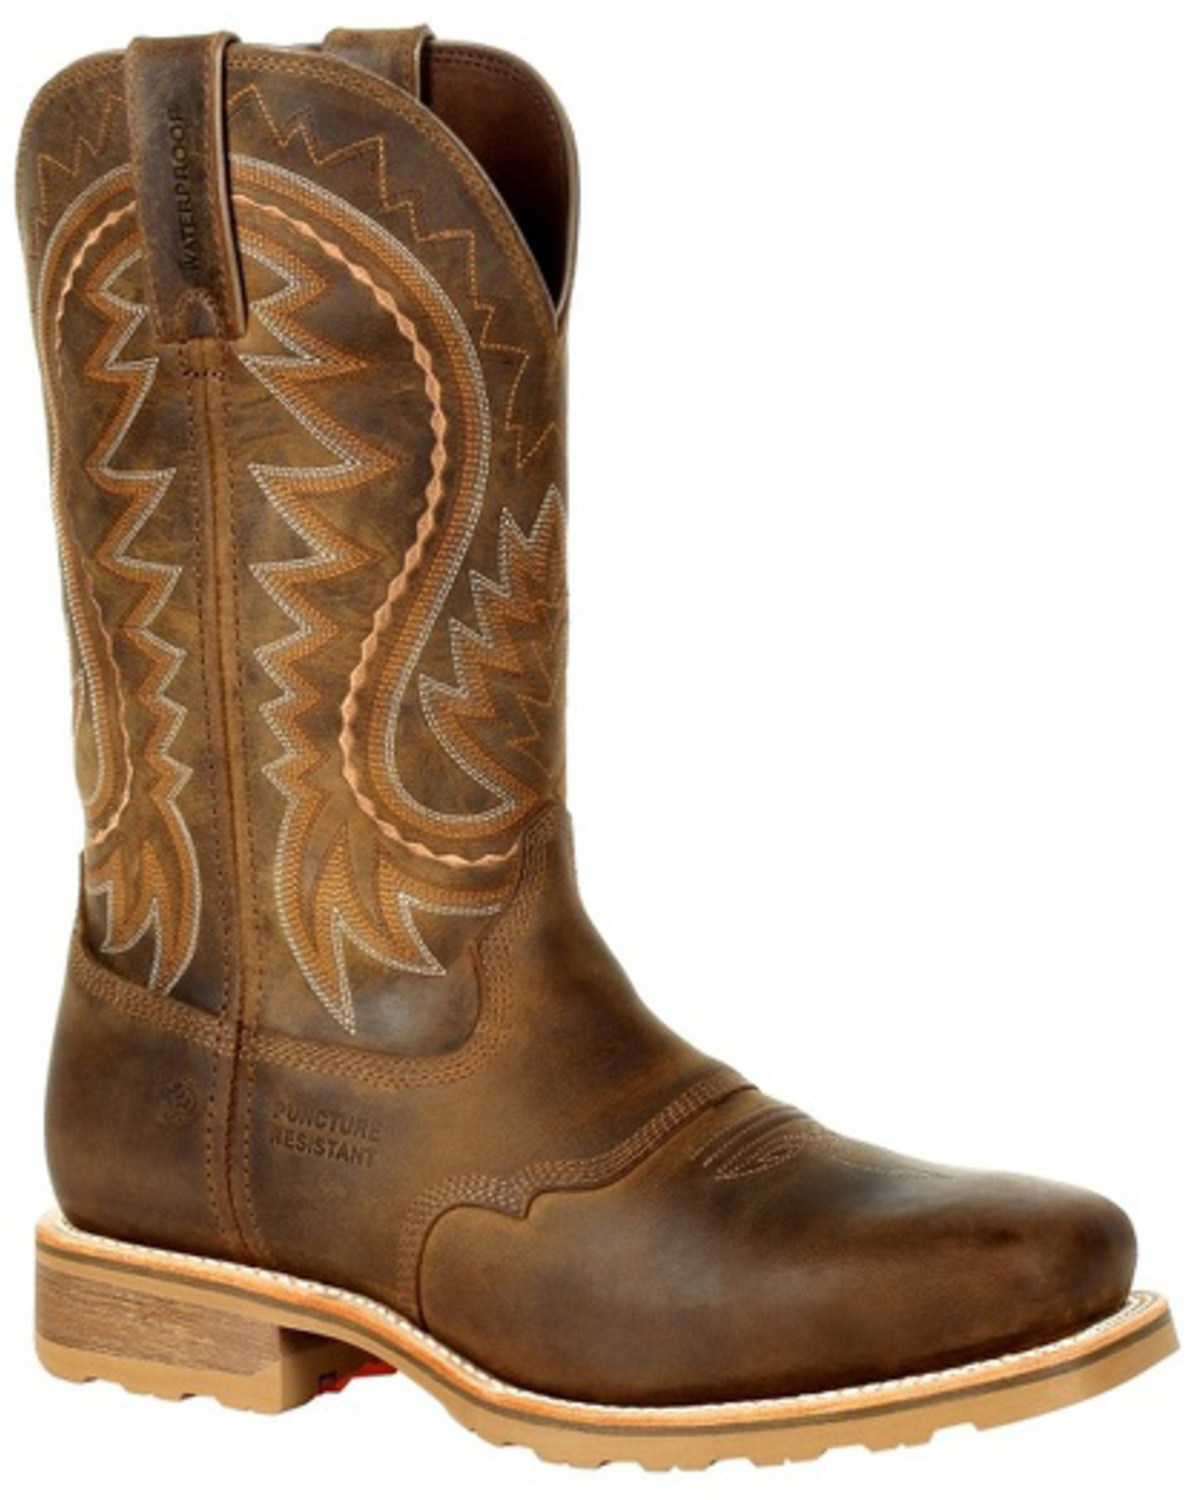 Durango Men's Maverick Pro Western Work Boots - Steel Toe